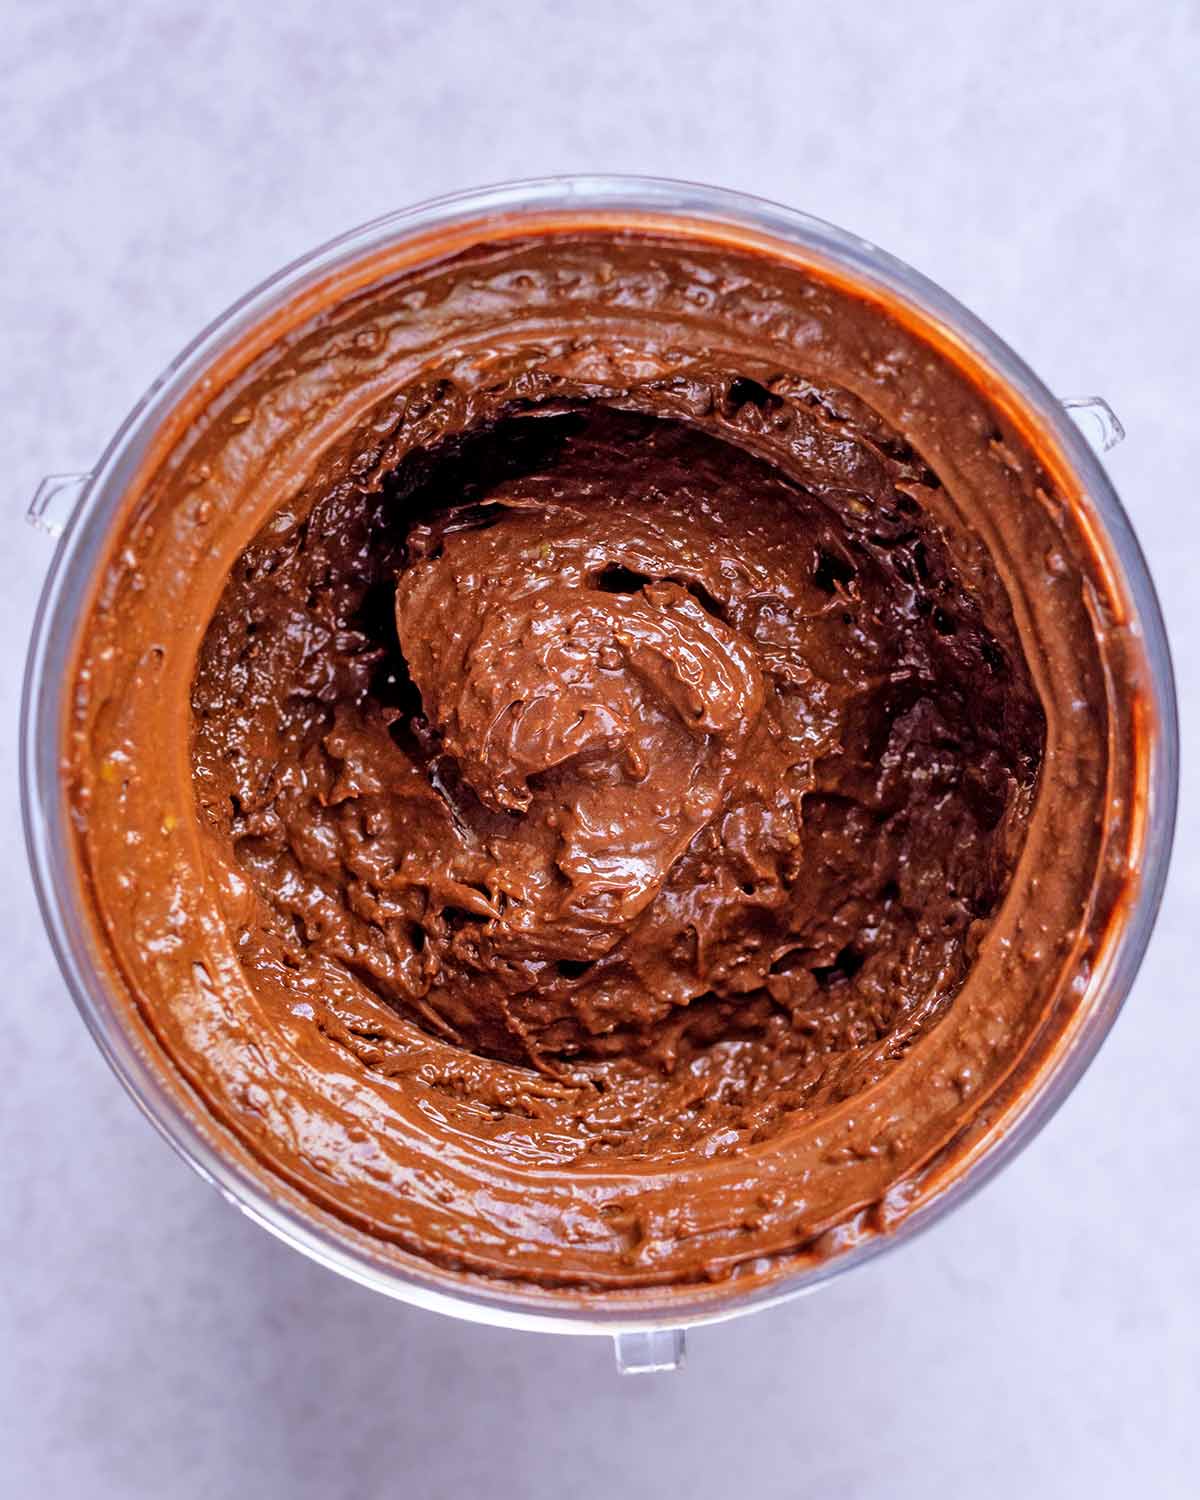 Blended chocolate pudding in a blender jug.